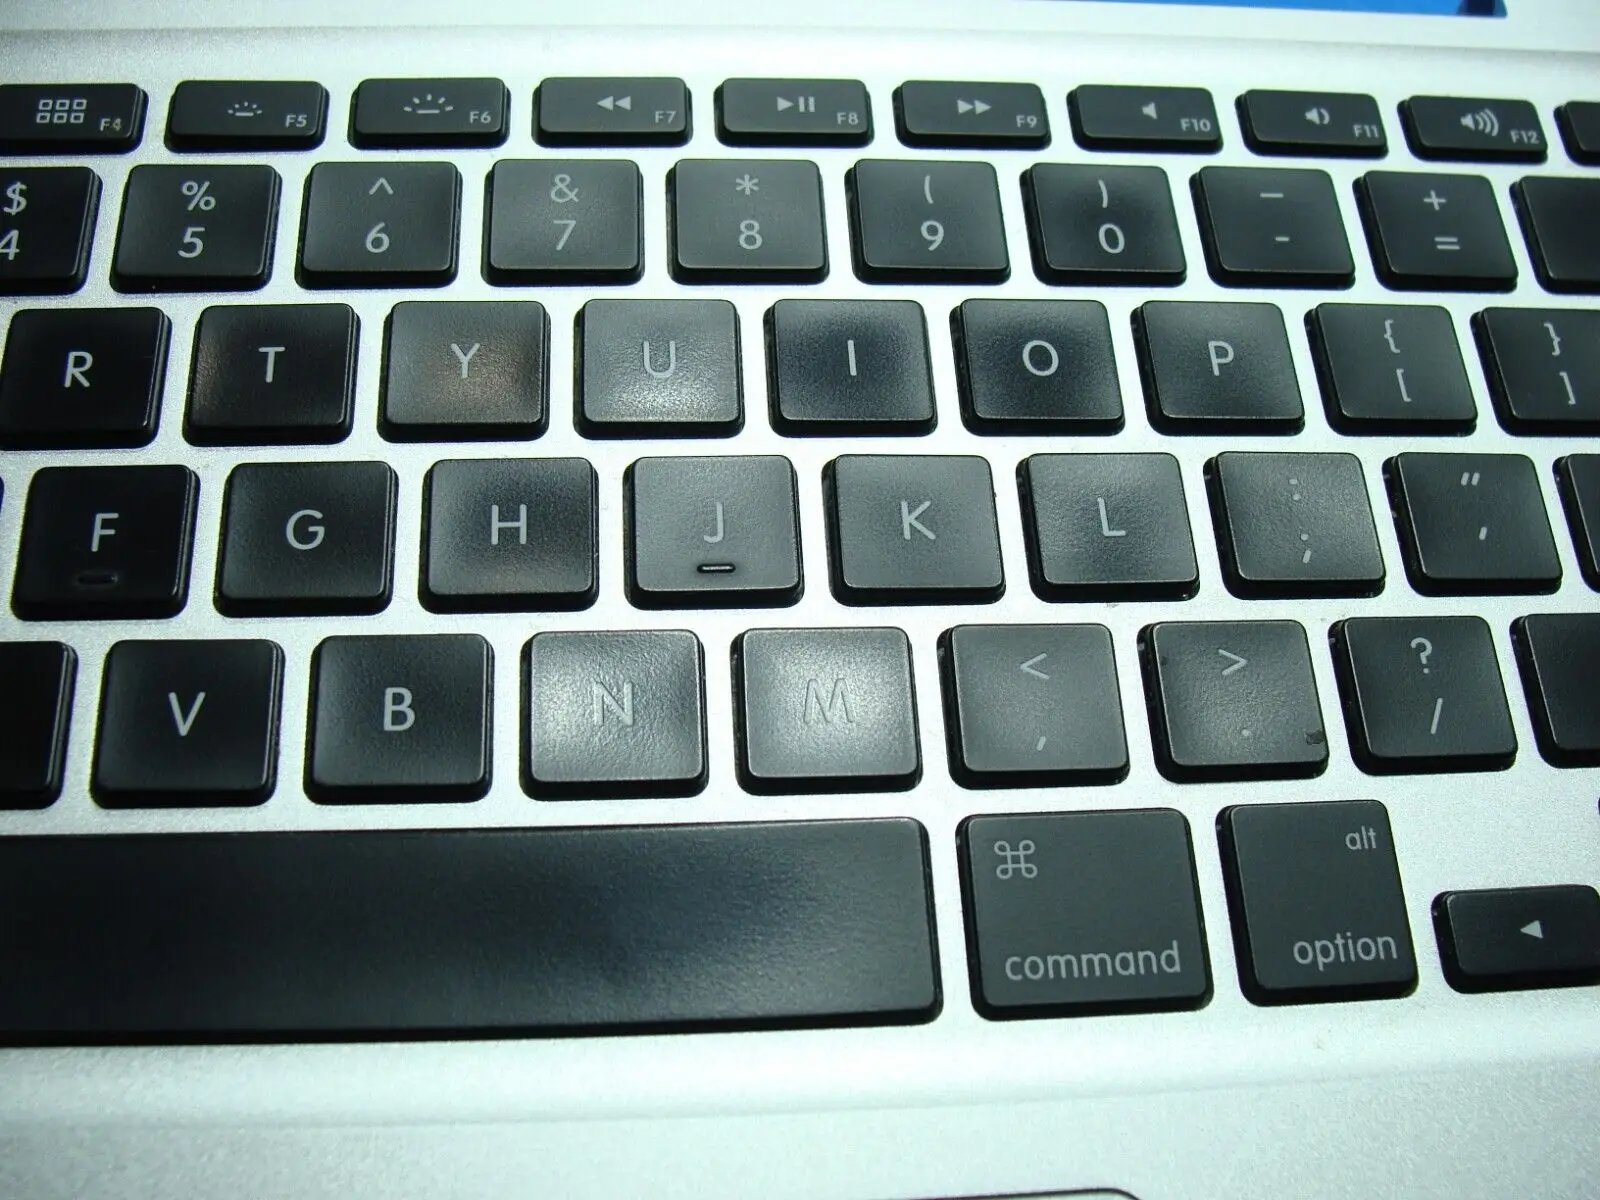 MacBook Pro A1278 13 Early 2011 MC700LL/A Top Case w/Keyboard Trackpad 661-5871